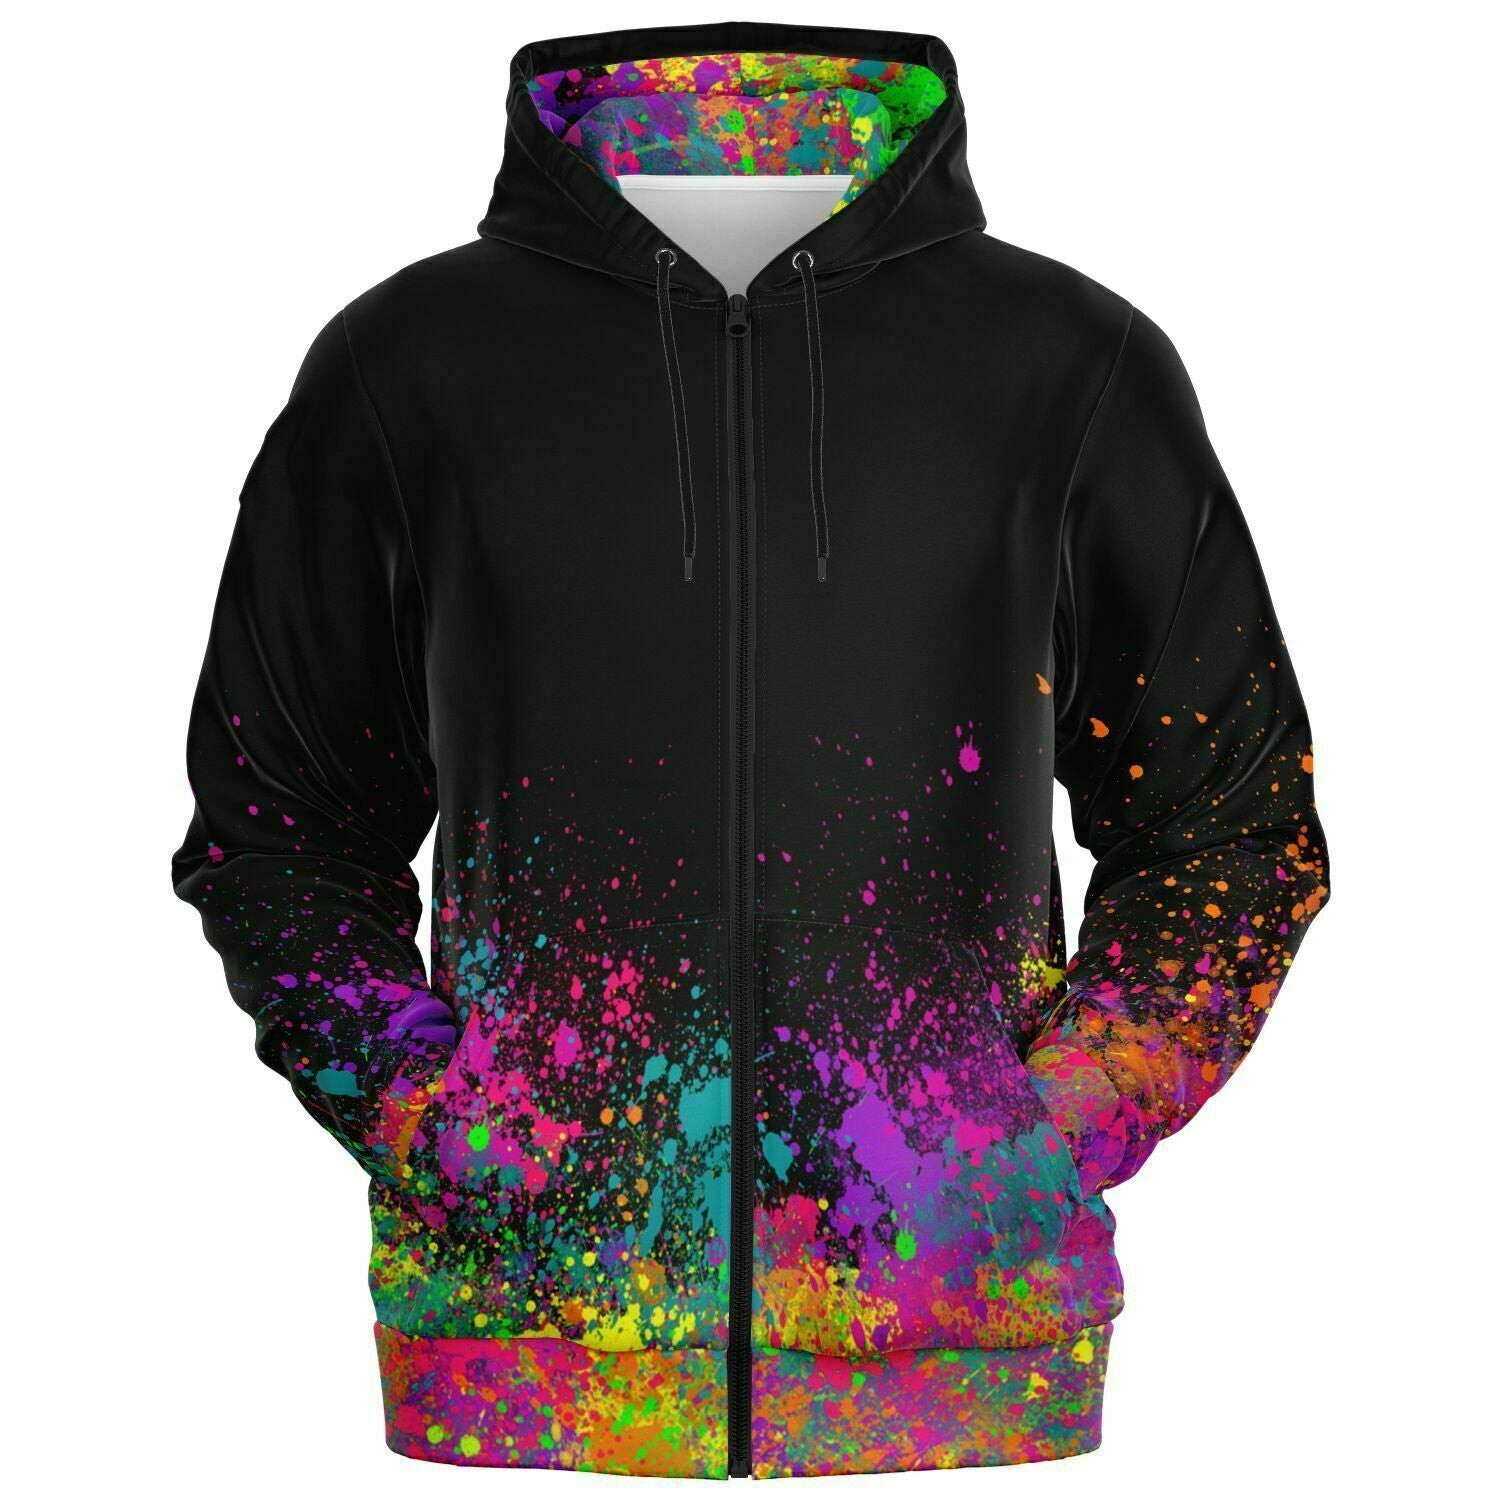 Zip hoodie for face painters Paint Splatter design